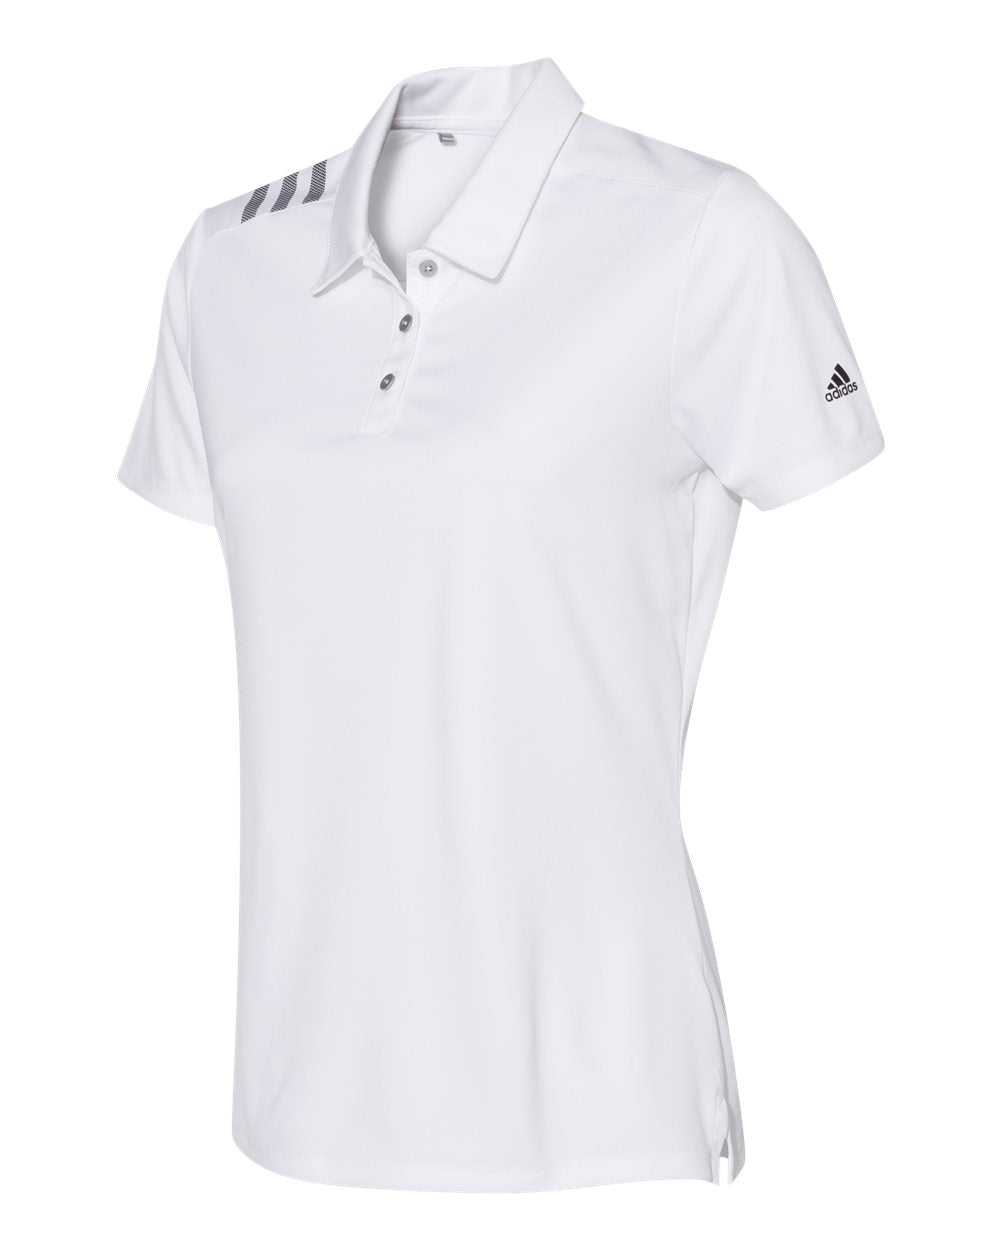 Adidas A325 Women's 3-Stripes Shoulder Sport Shirt - White Black - HIT a Double